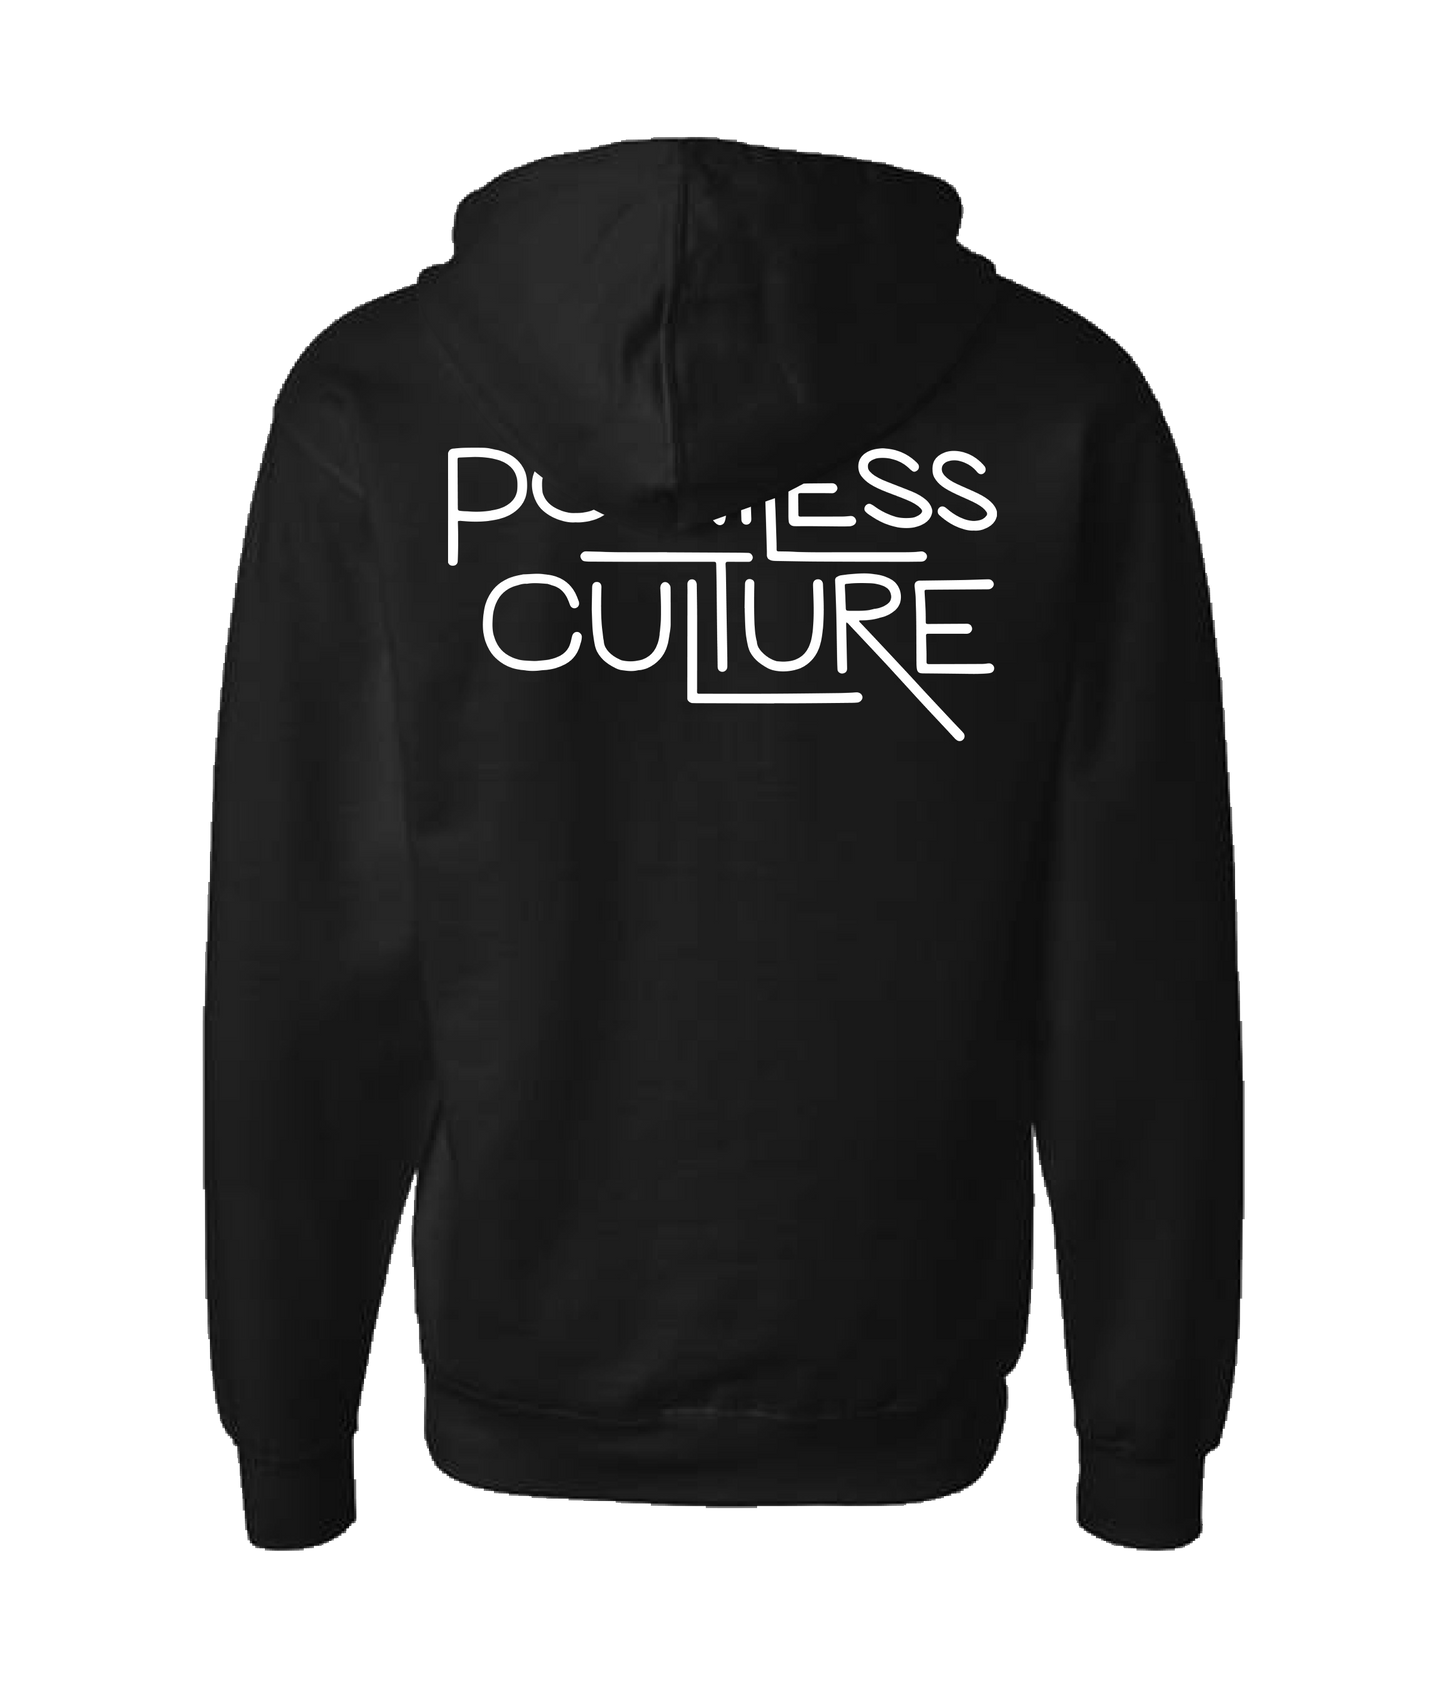 Pointless Culture - Pointless Culture - Black Zip Up Hoodie